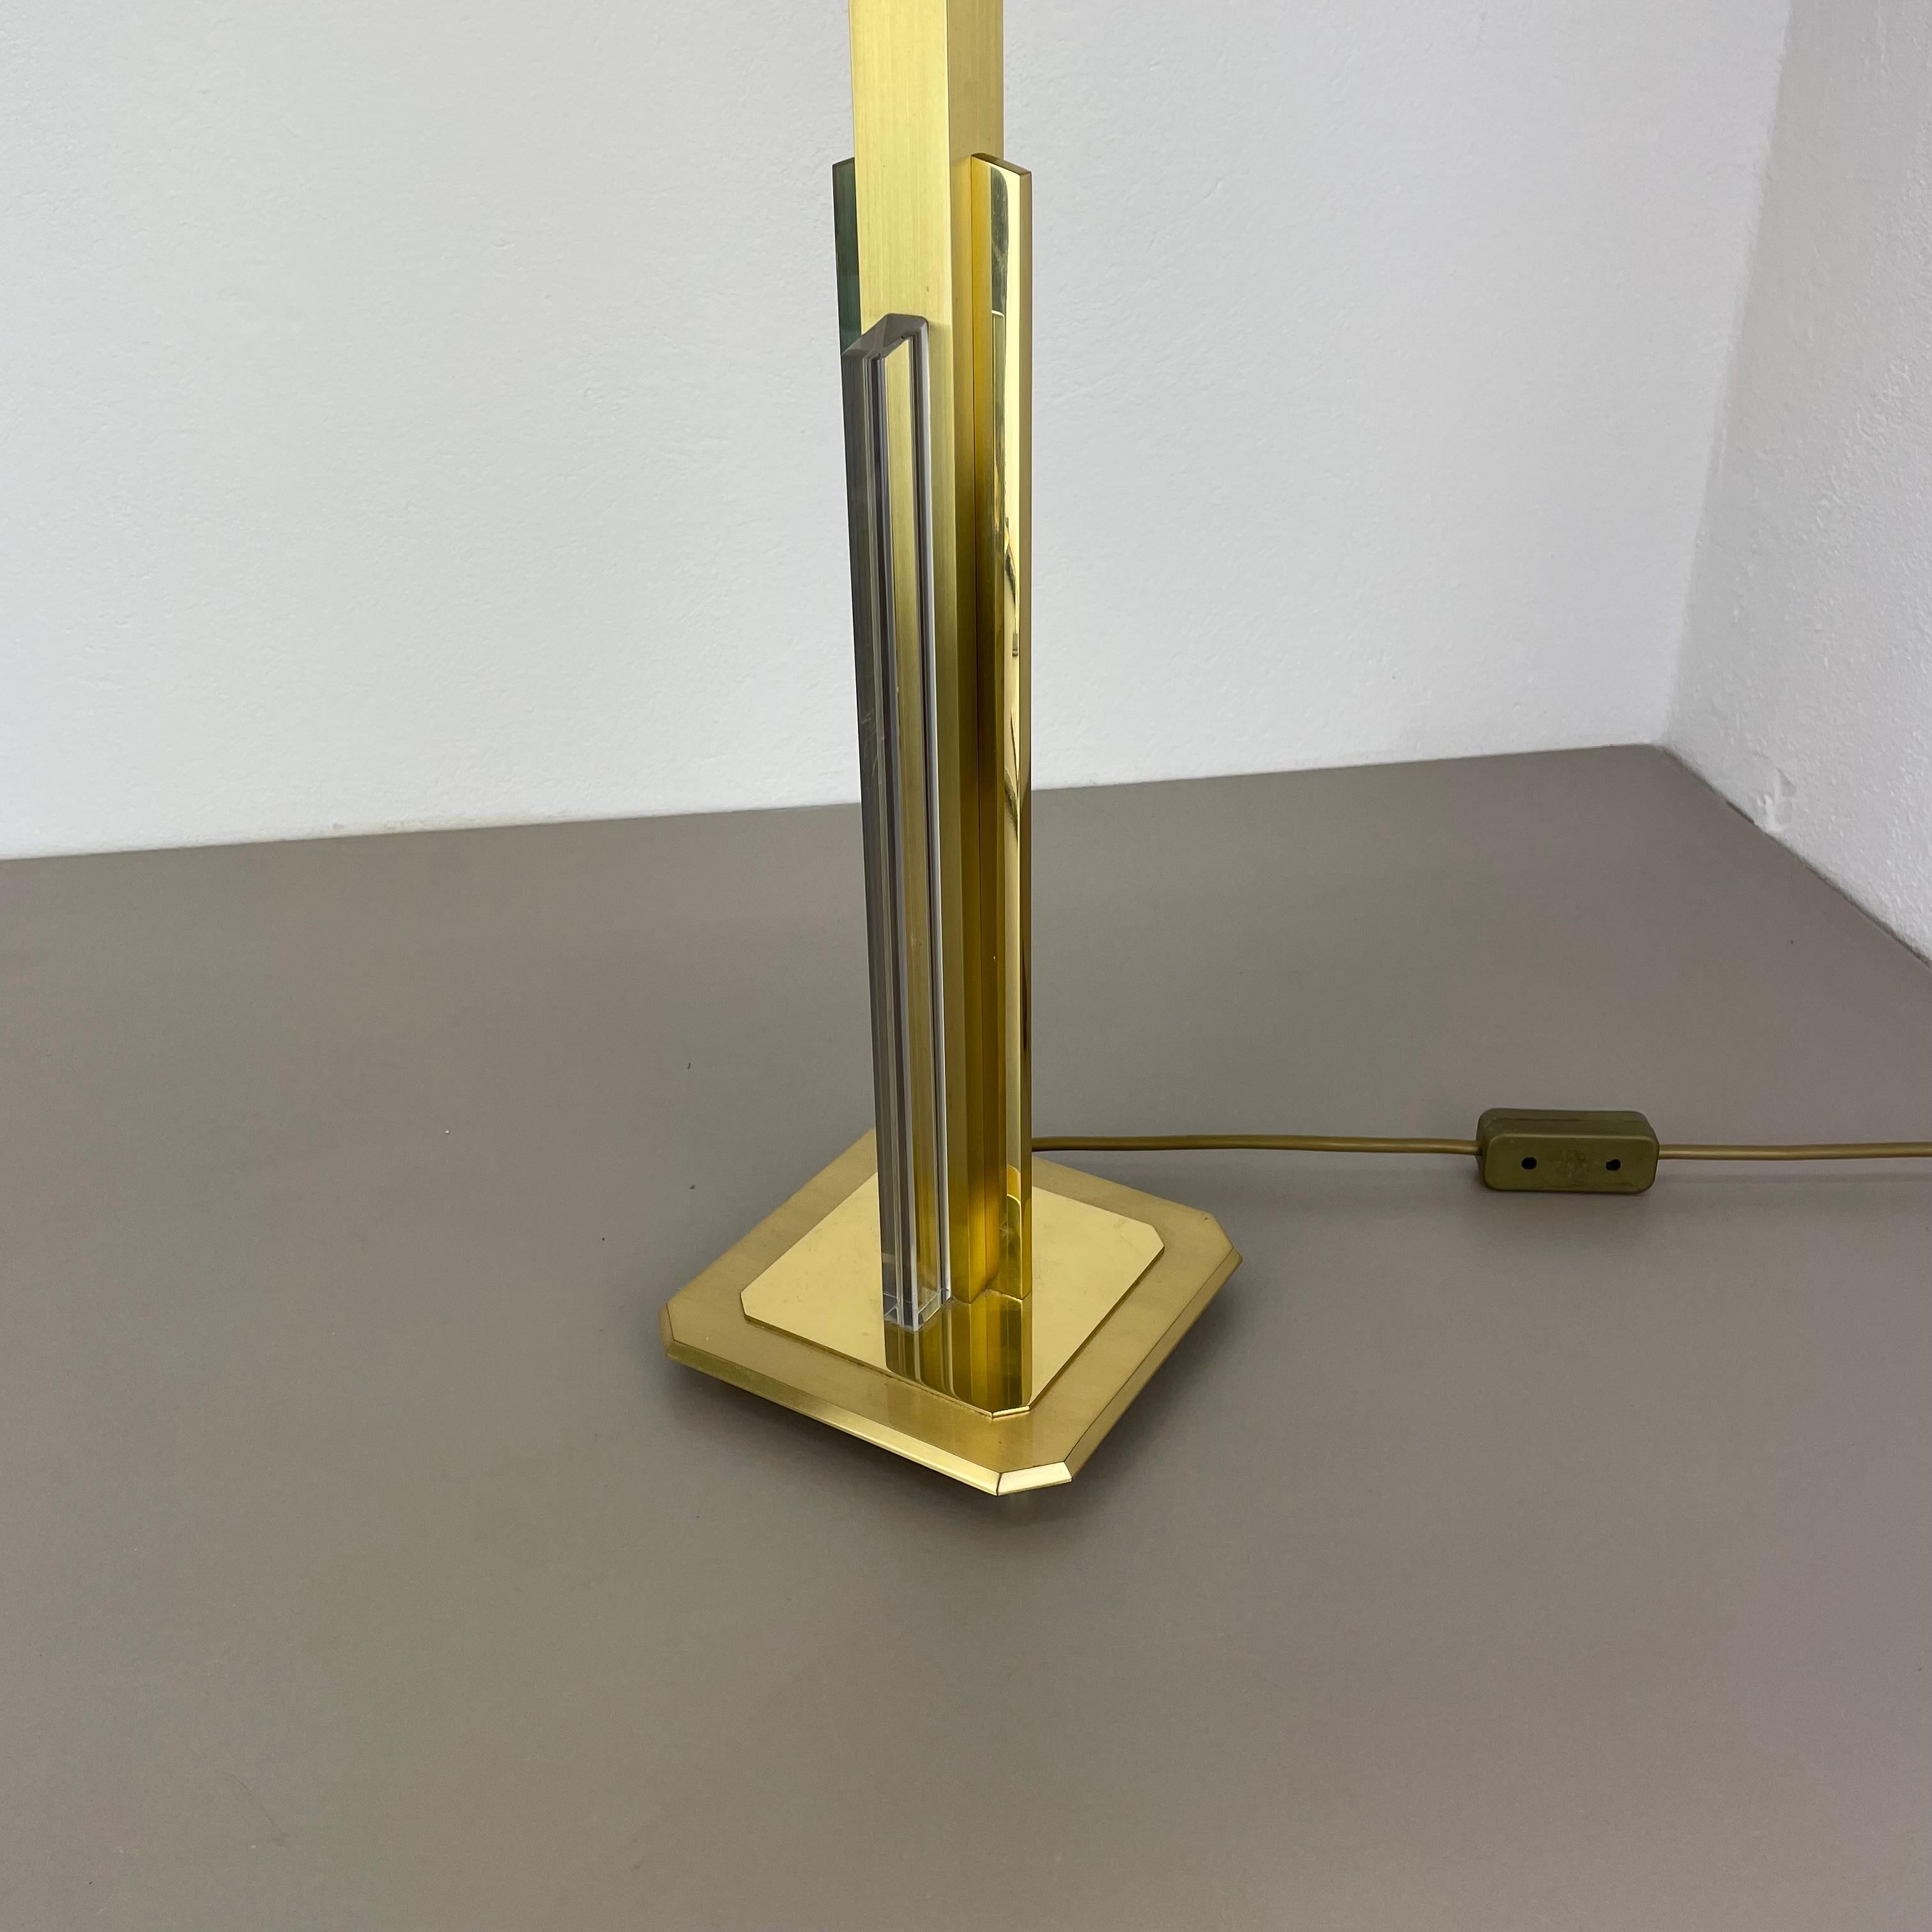 heavy 71cm Hollywood Regency Style Brass and Acryl Table Light, Italy 1970s For Sale 13